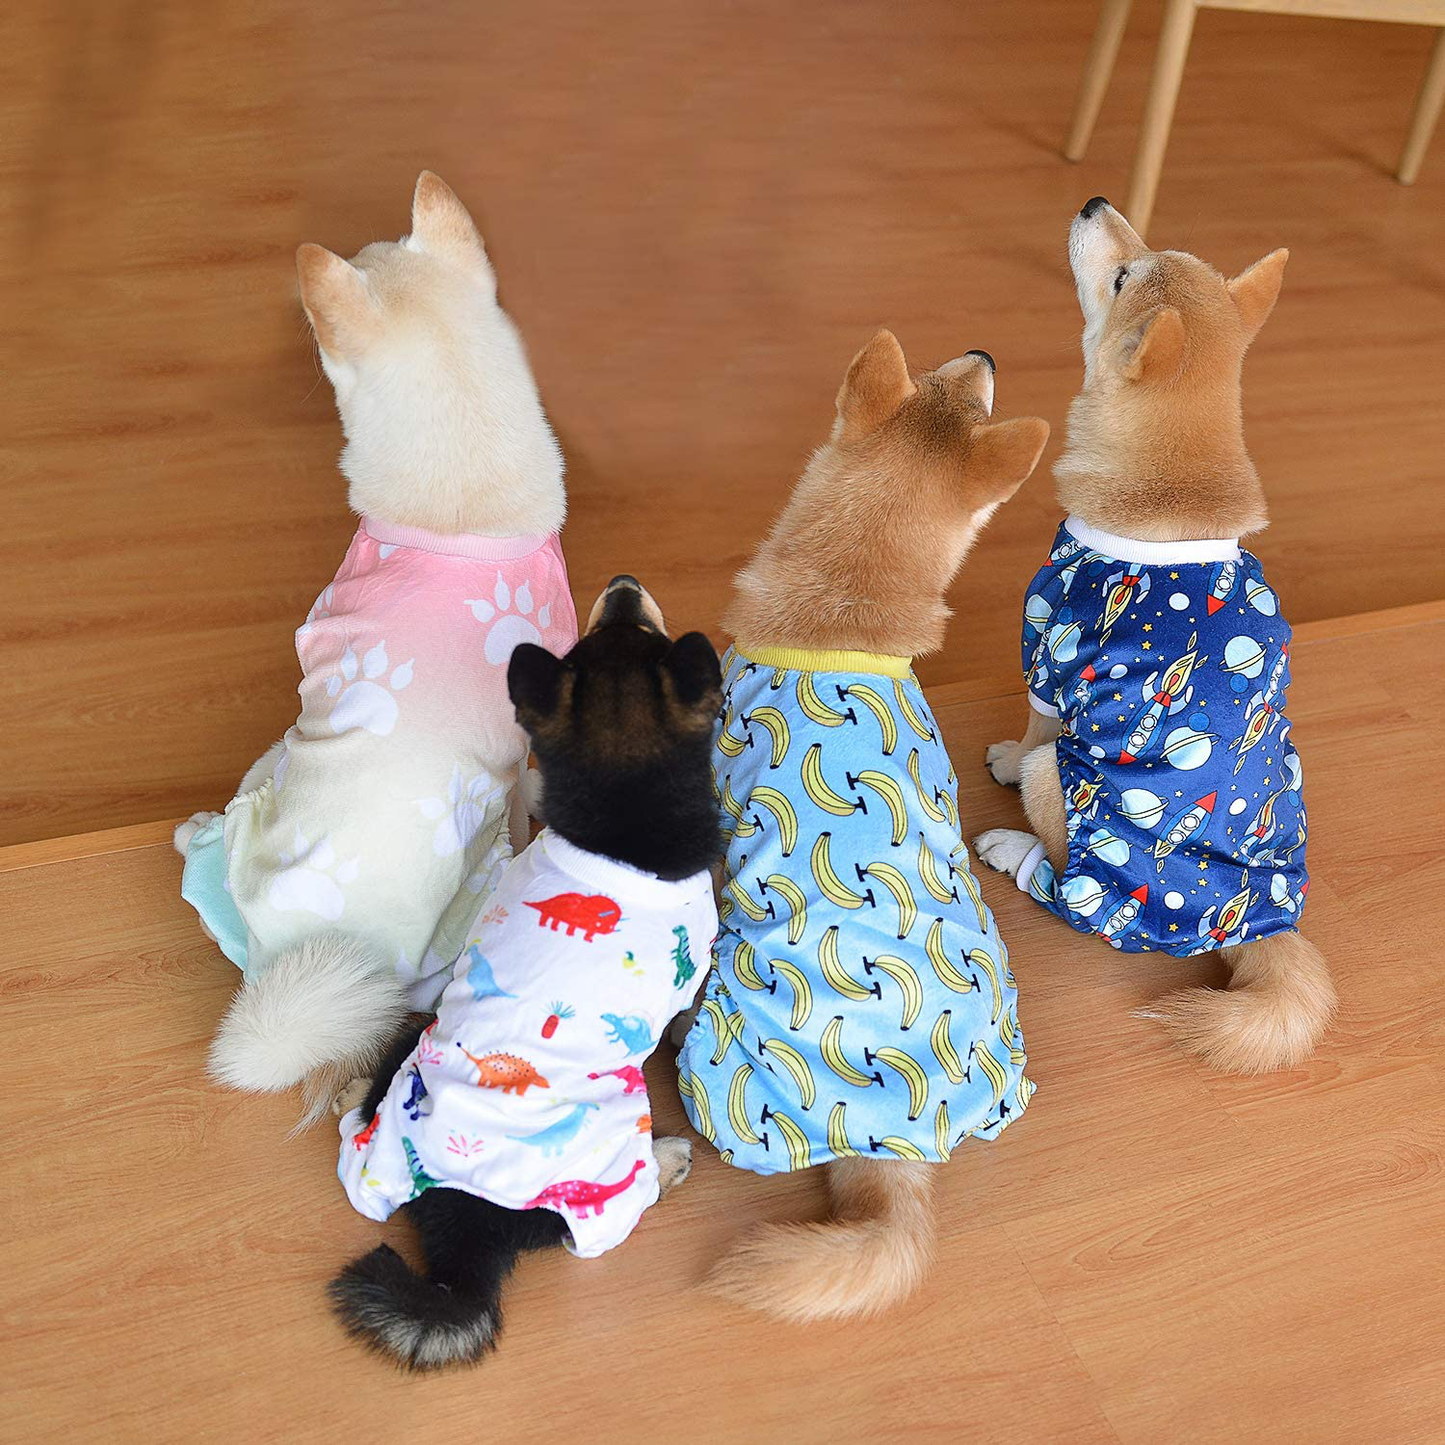 Cutebone Dog Pajamas Soft Cat Clothes Cute Puppy Apparel Doggie Outfit Pet Pjs Onesie